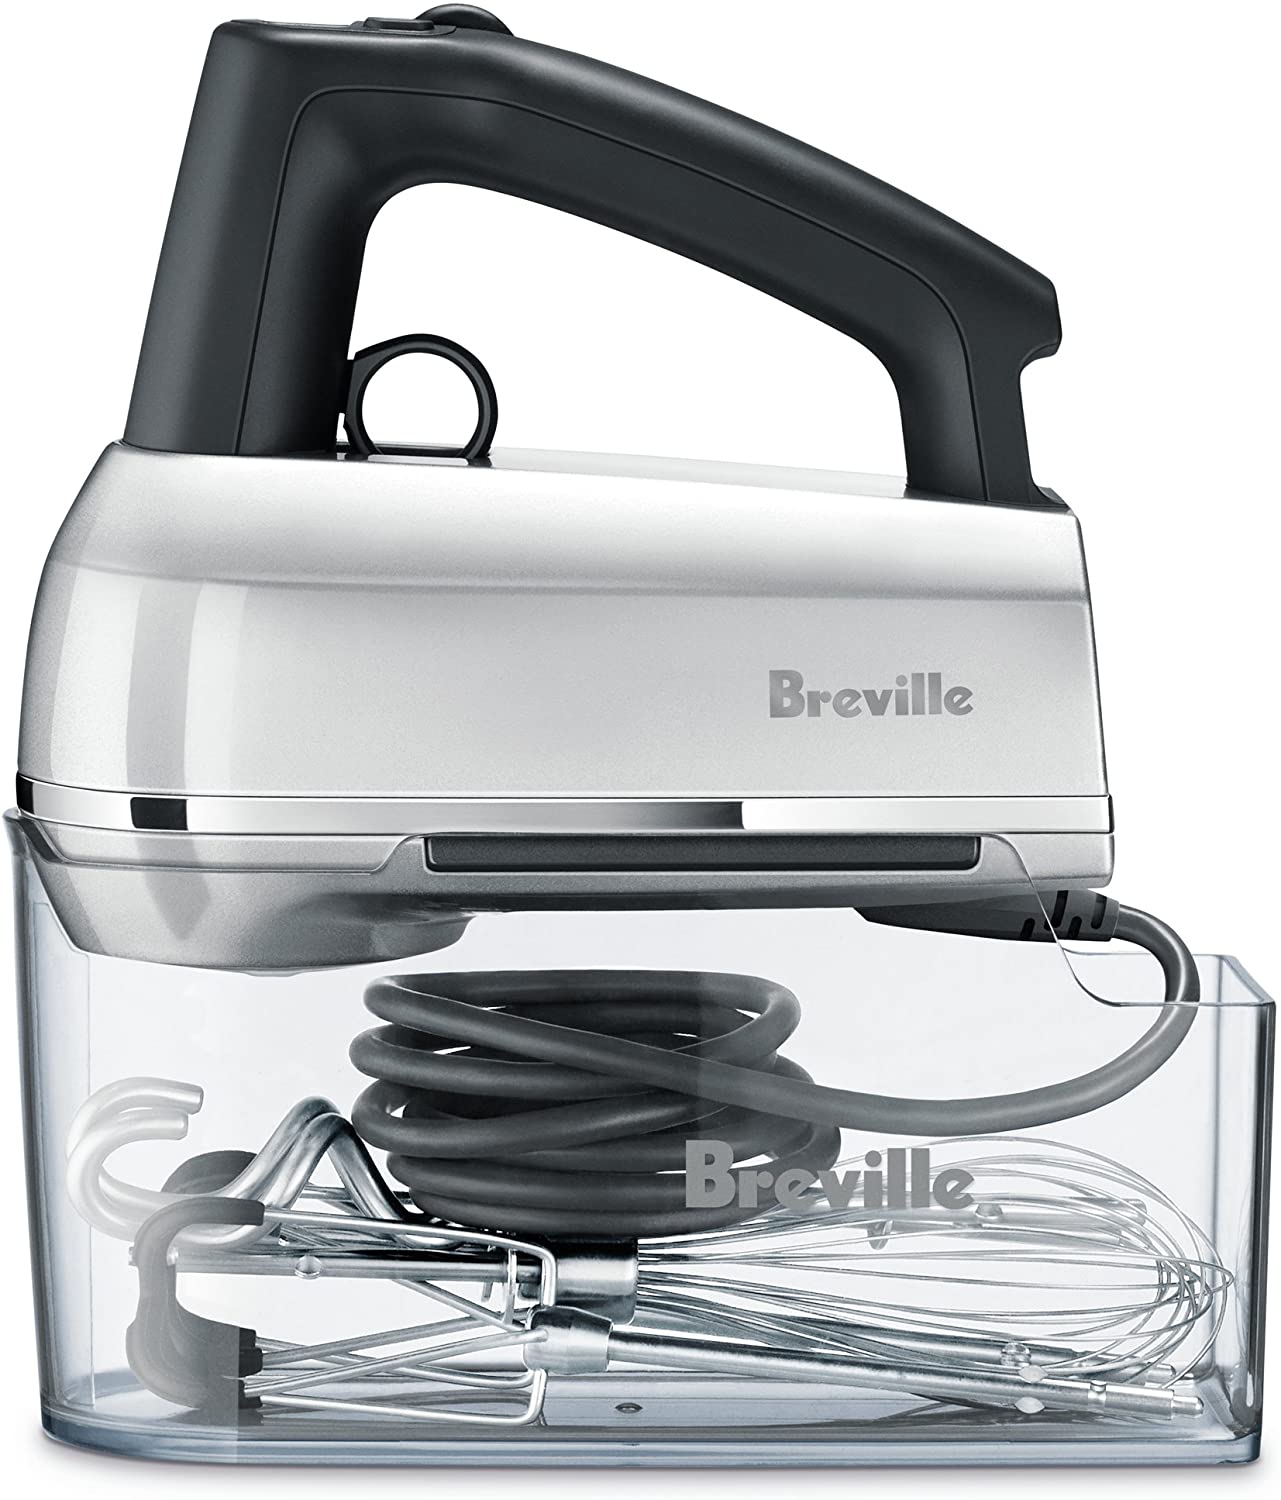 Breville Handy Mix Scraper Hand Mixer, Silver, BHM800SIL - image 4 of 7